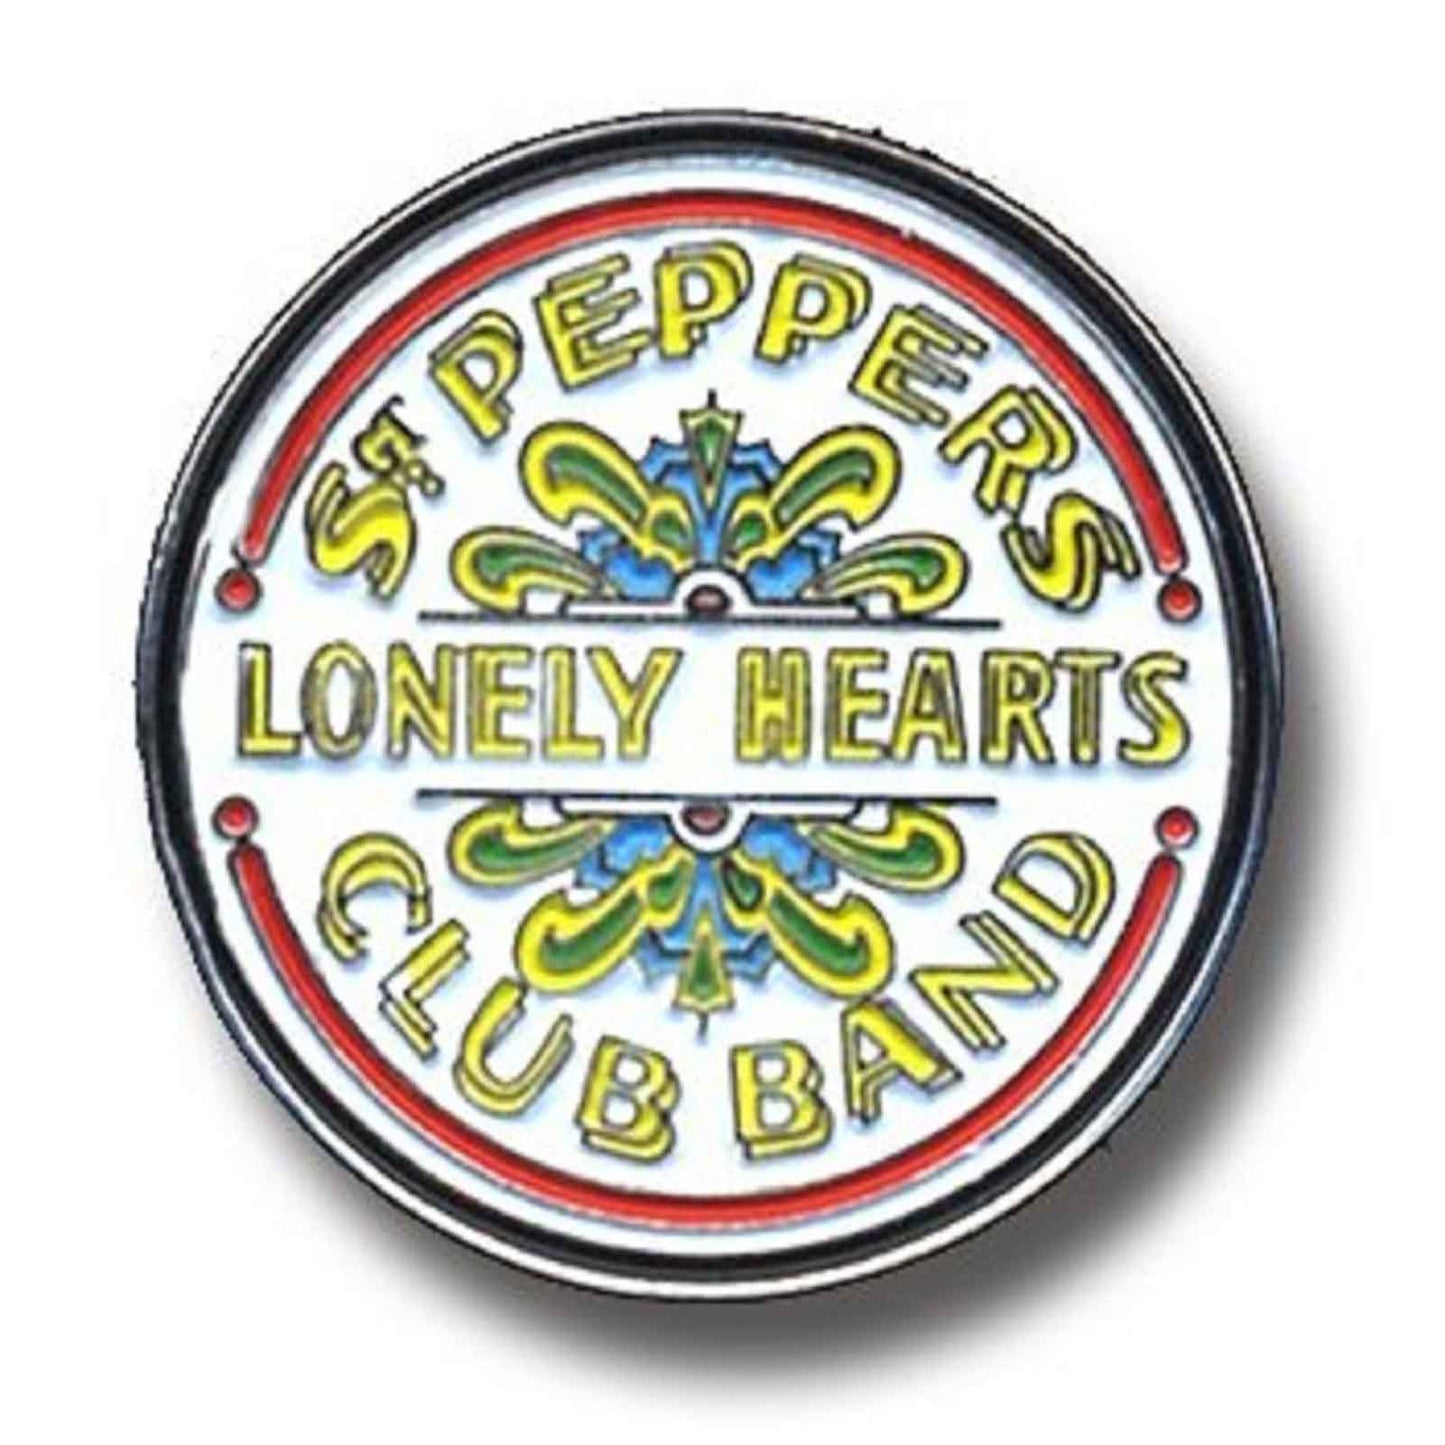 The Beatles Sgt Pepper Drum Pin Badge